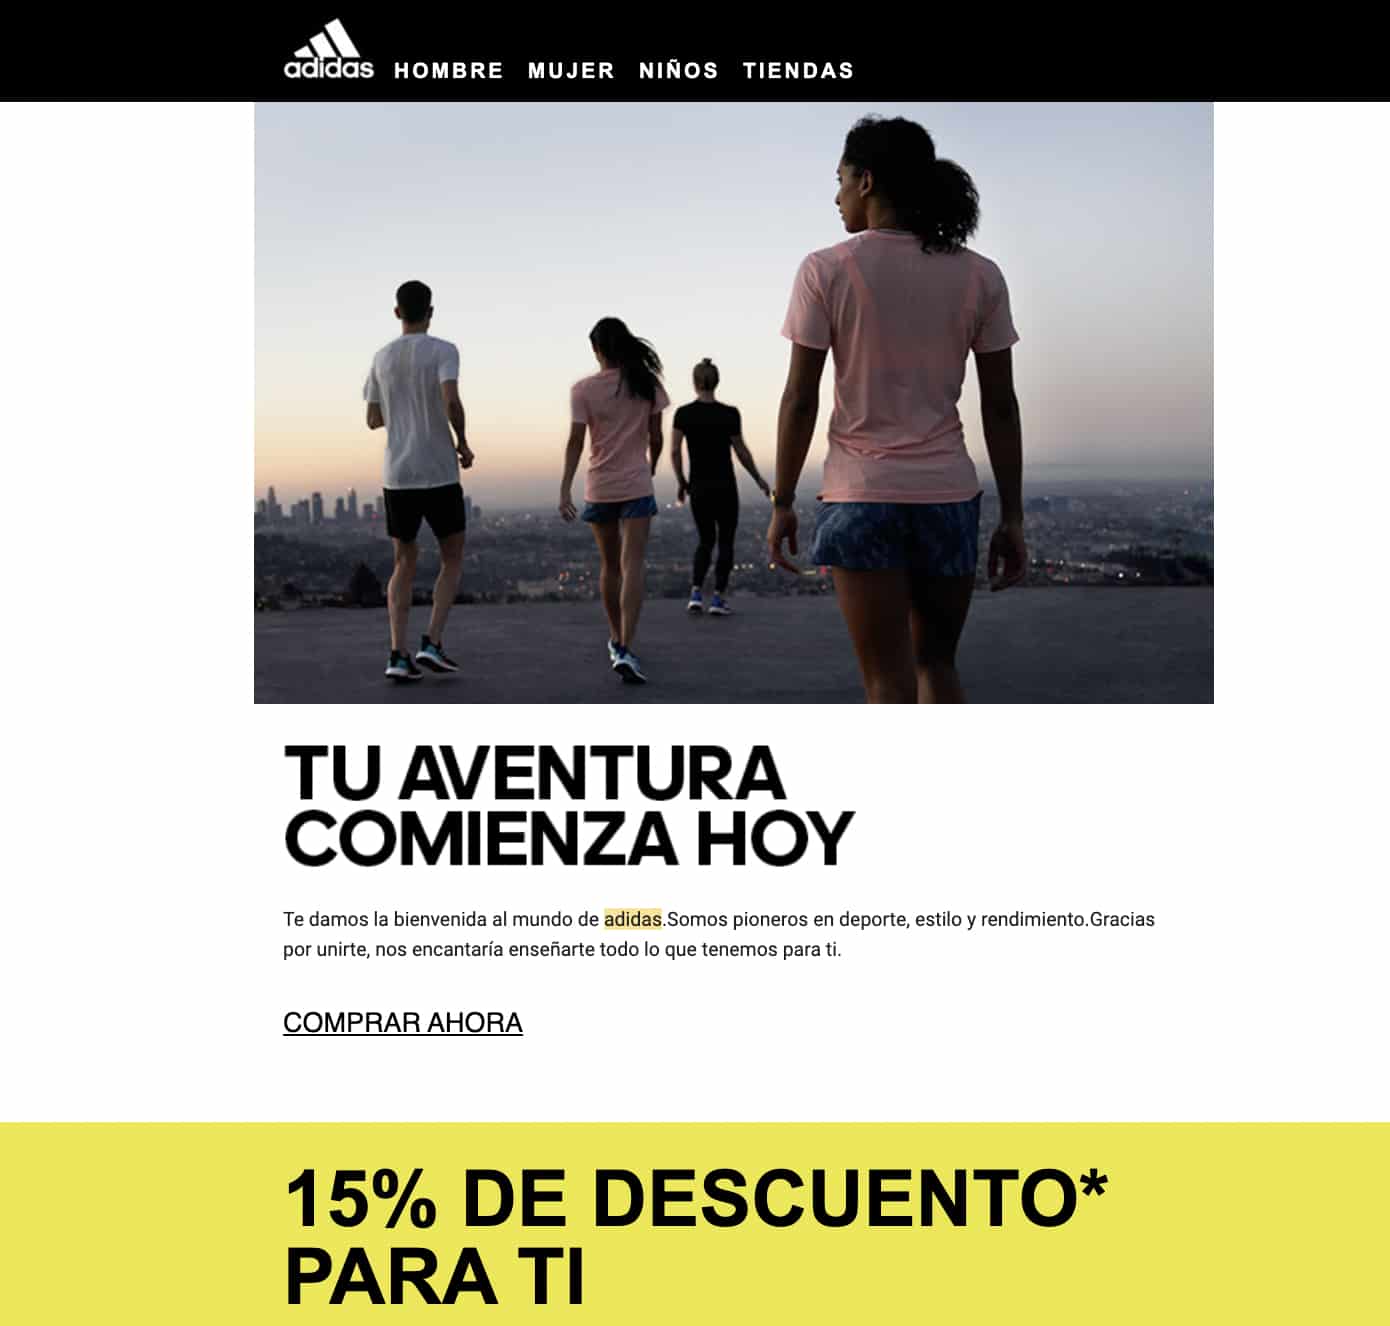 Ejemplo de estrategia de cross-selling de Adidas